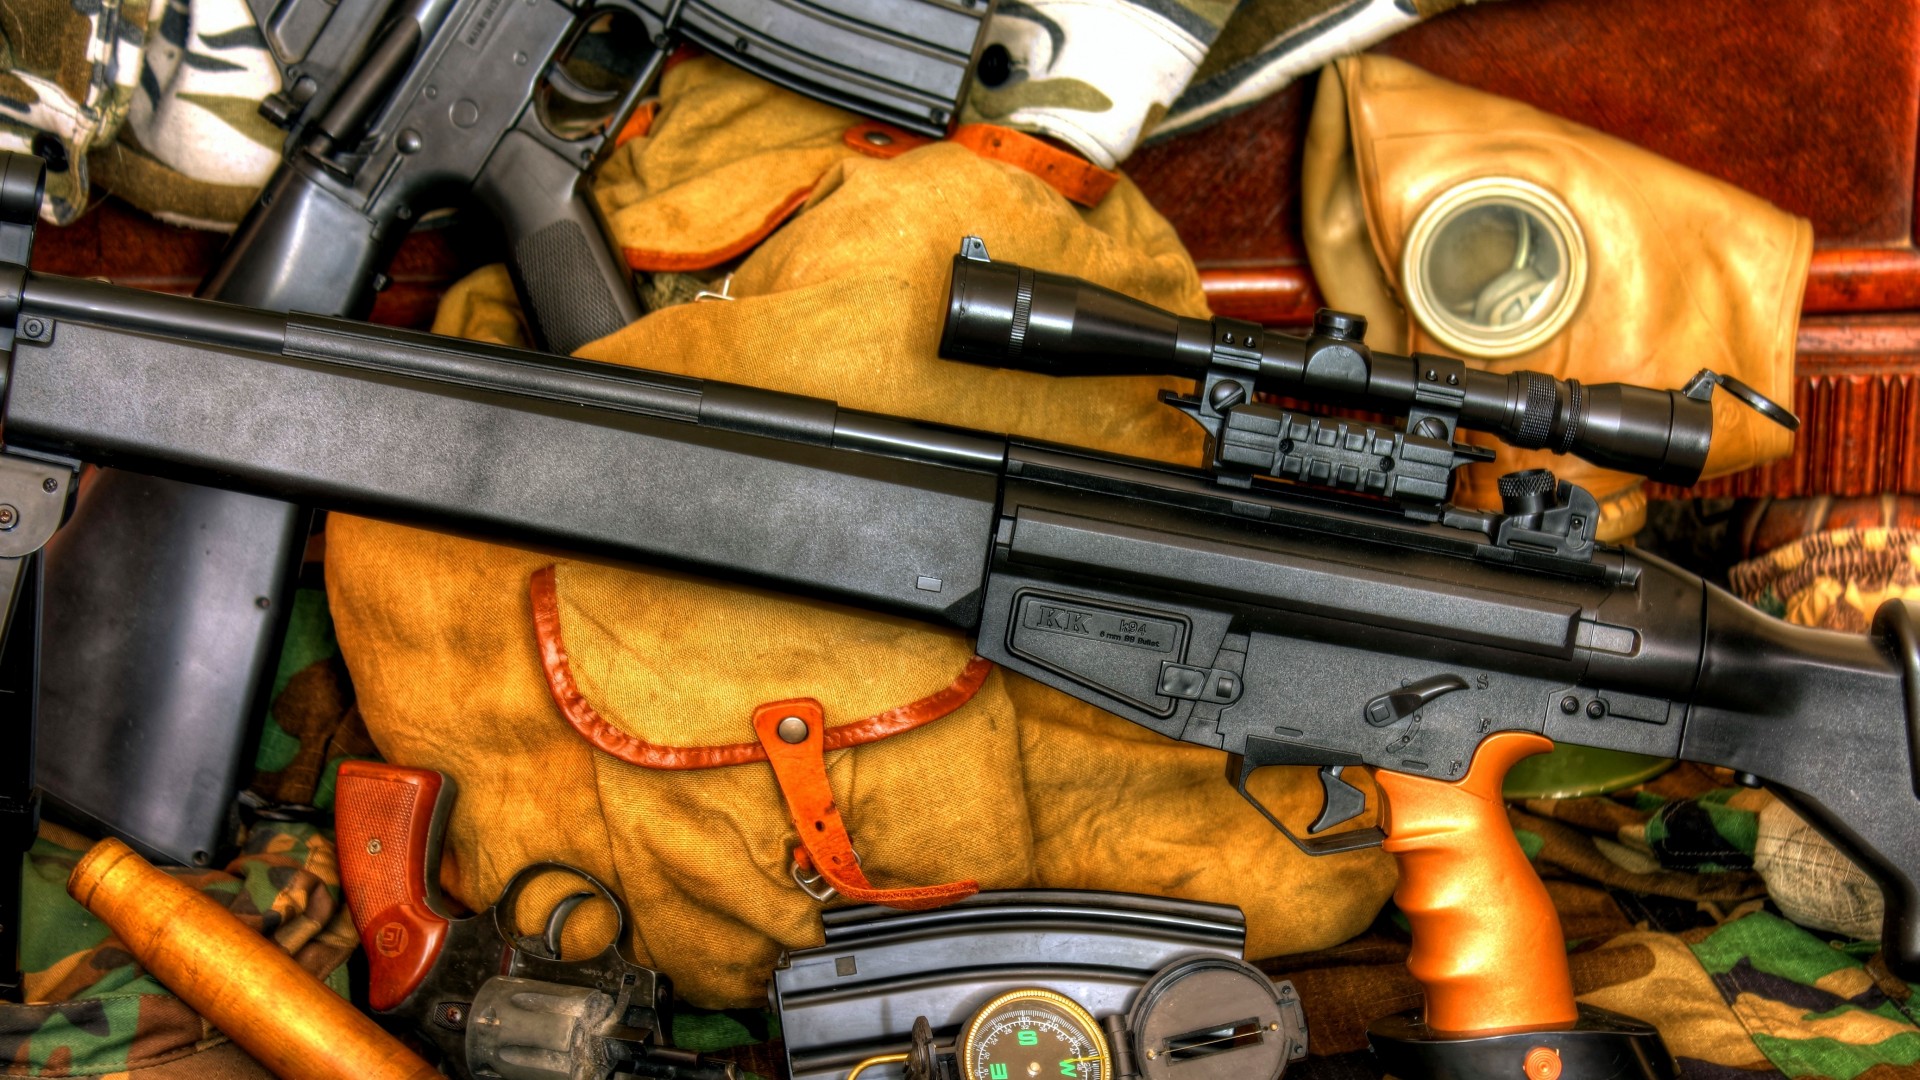 K 94, sniper rifle, m16a1, compass, FPS-200, scope, ammunition, bullets (horizontal)